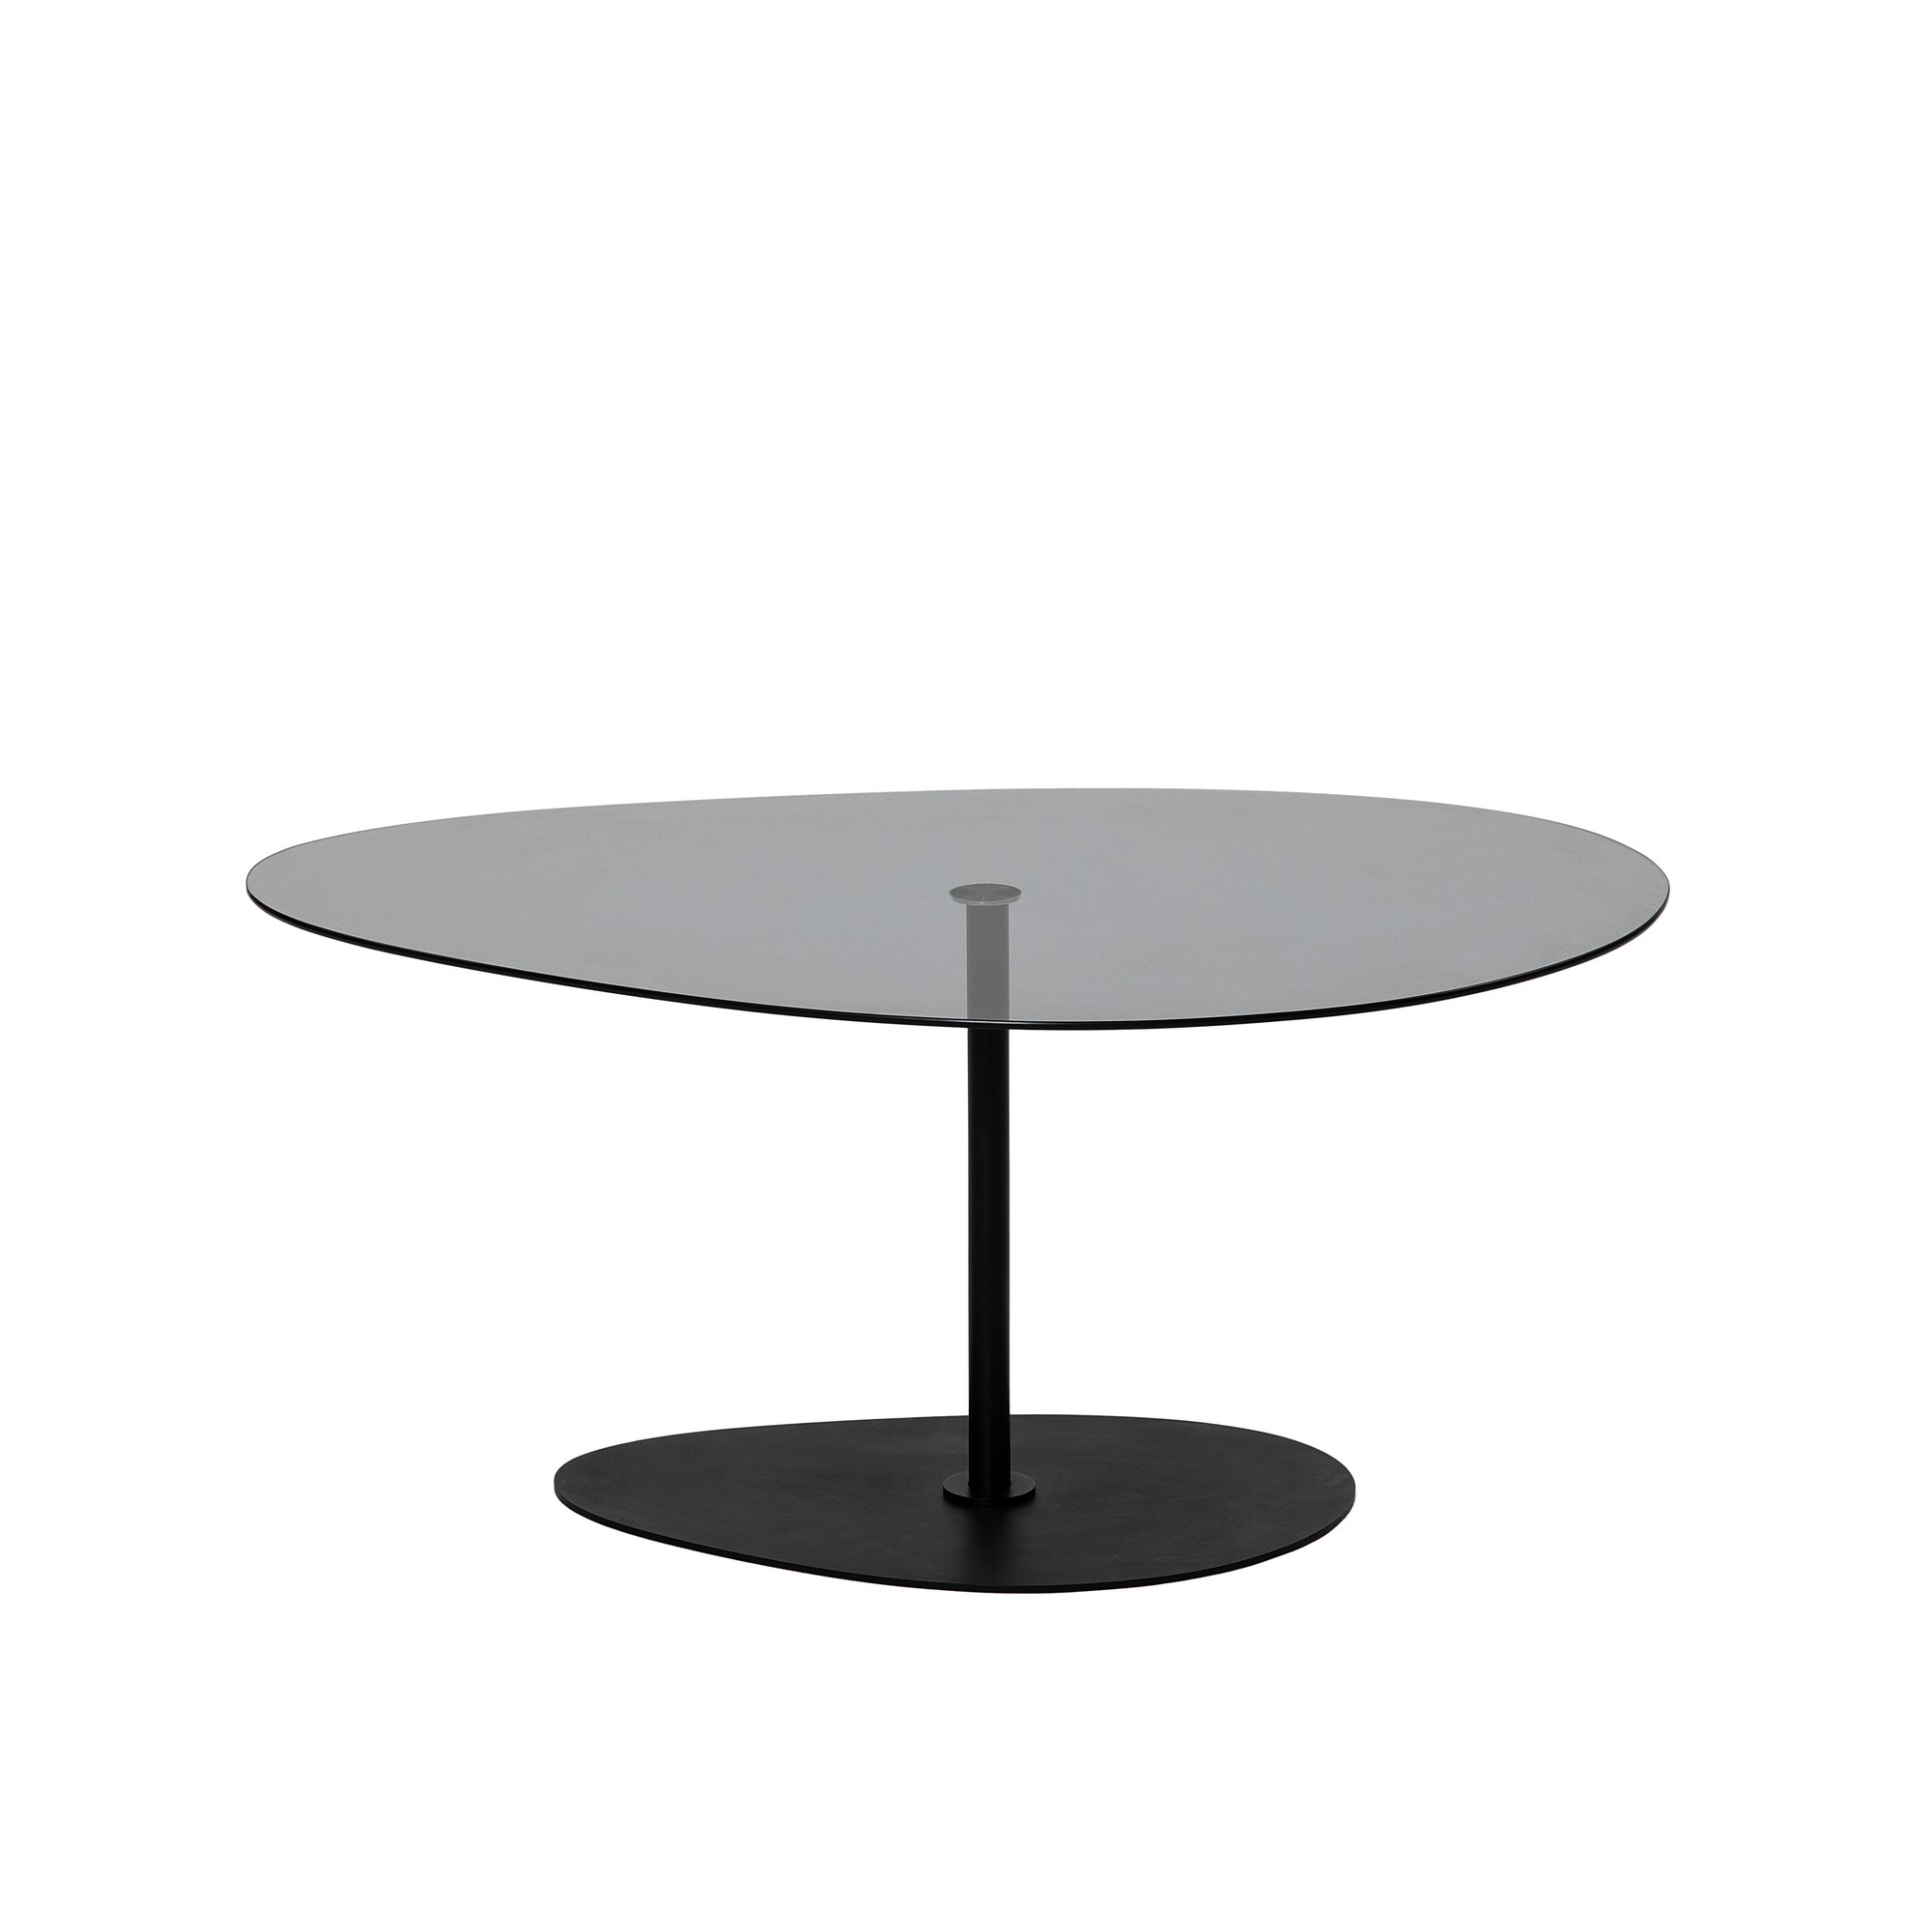 NORDVÄRK Porto sofabord, organisk - mørkegrå glas og sort metal (90x60)